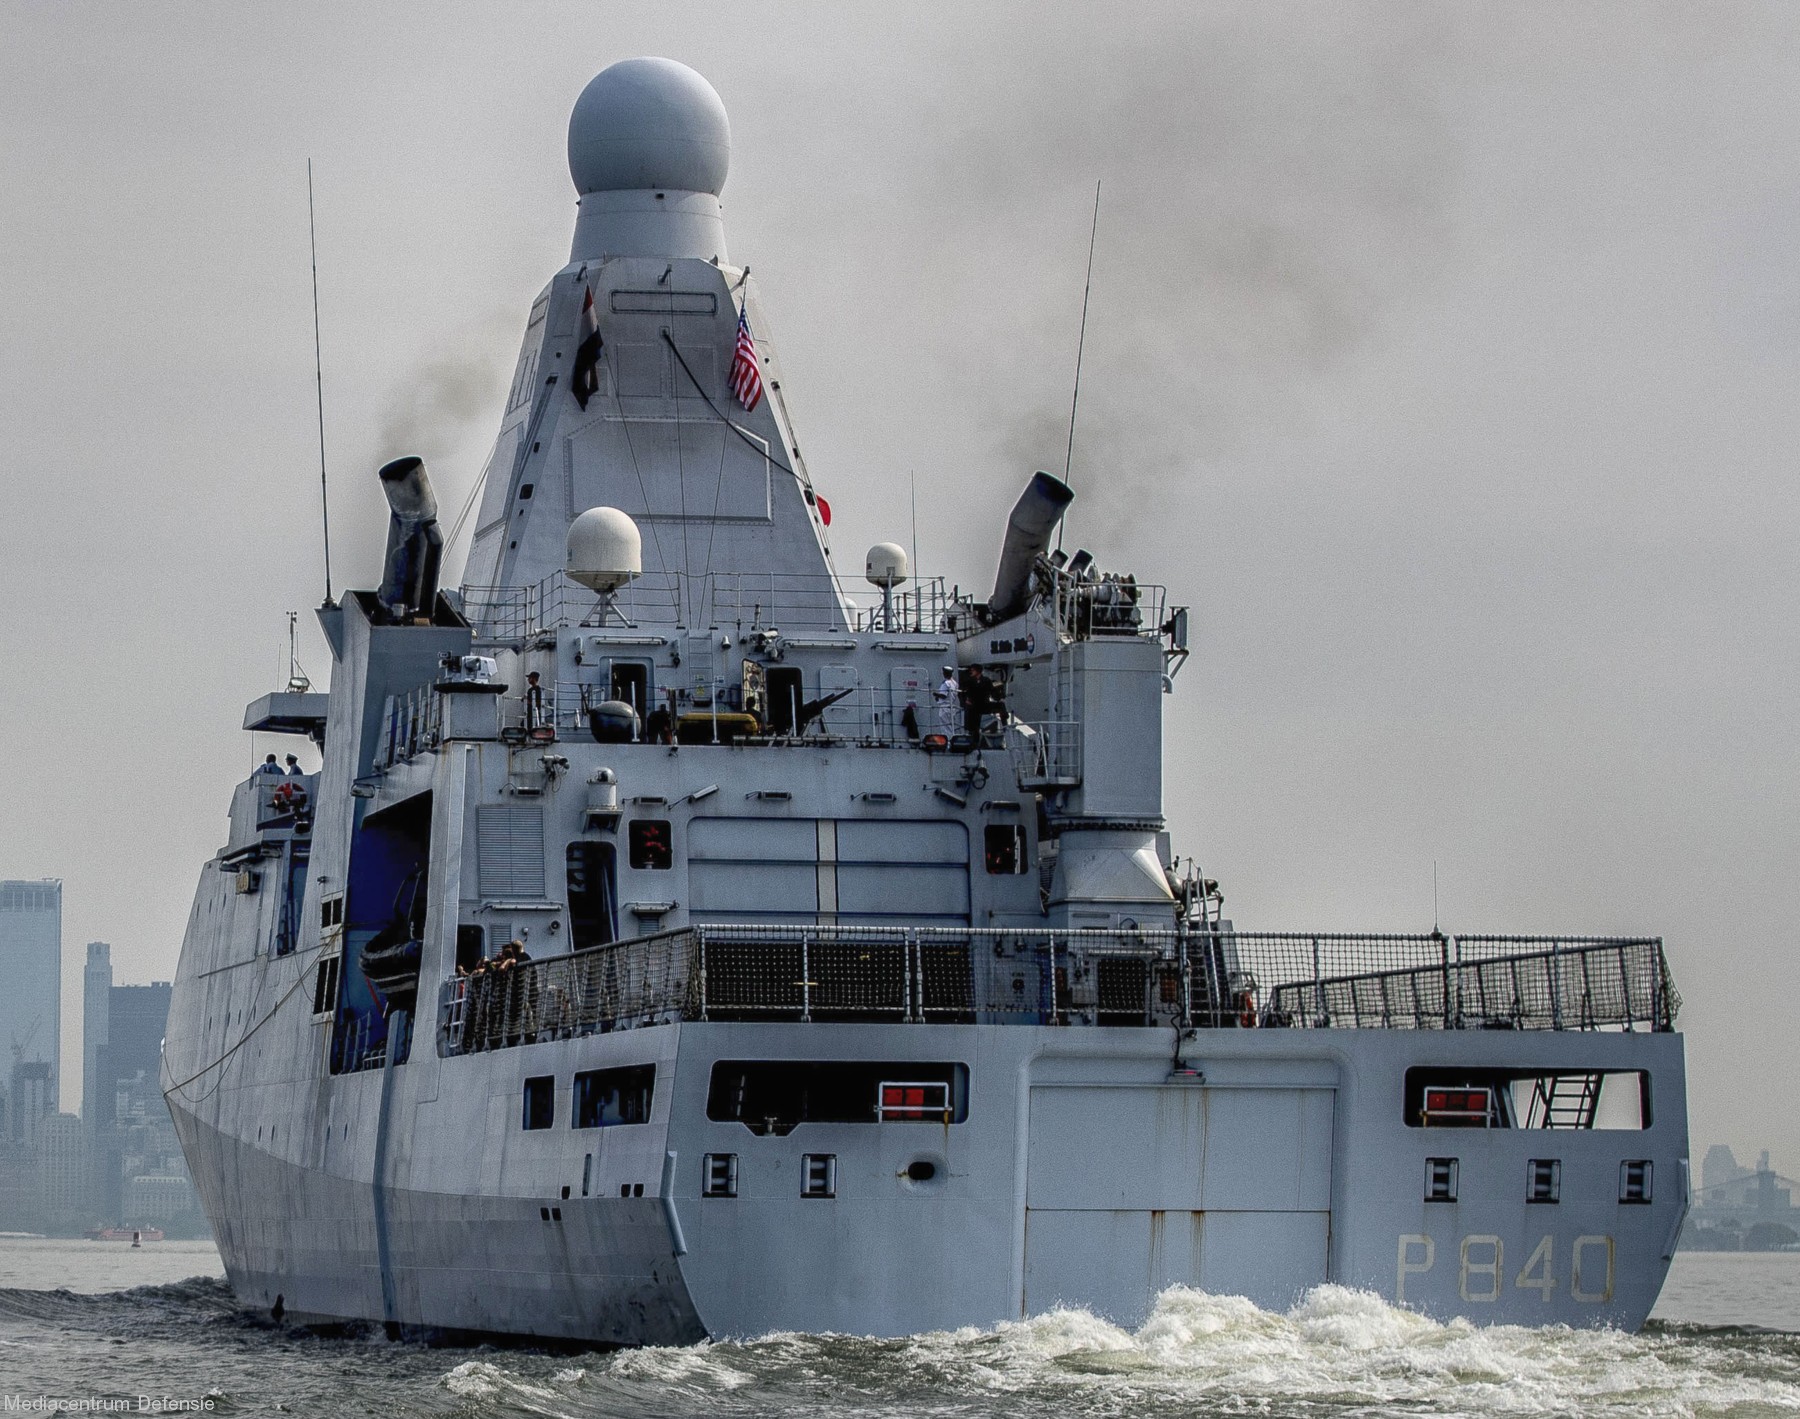 p-840 hnlms holland offshore patrol vessel opv royal netherlands navy 03